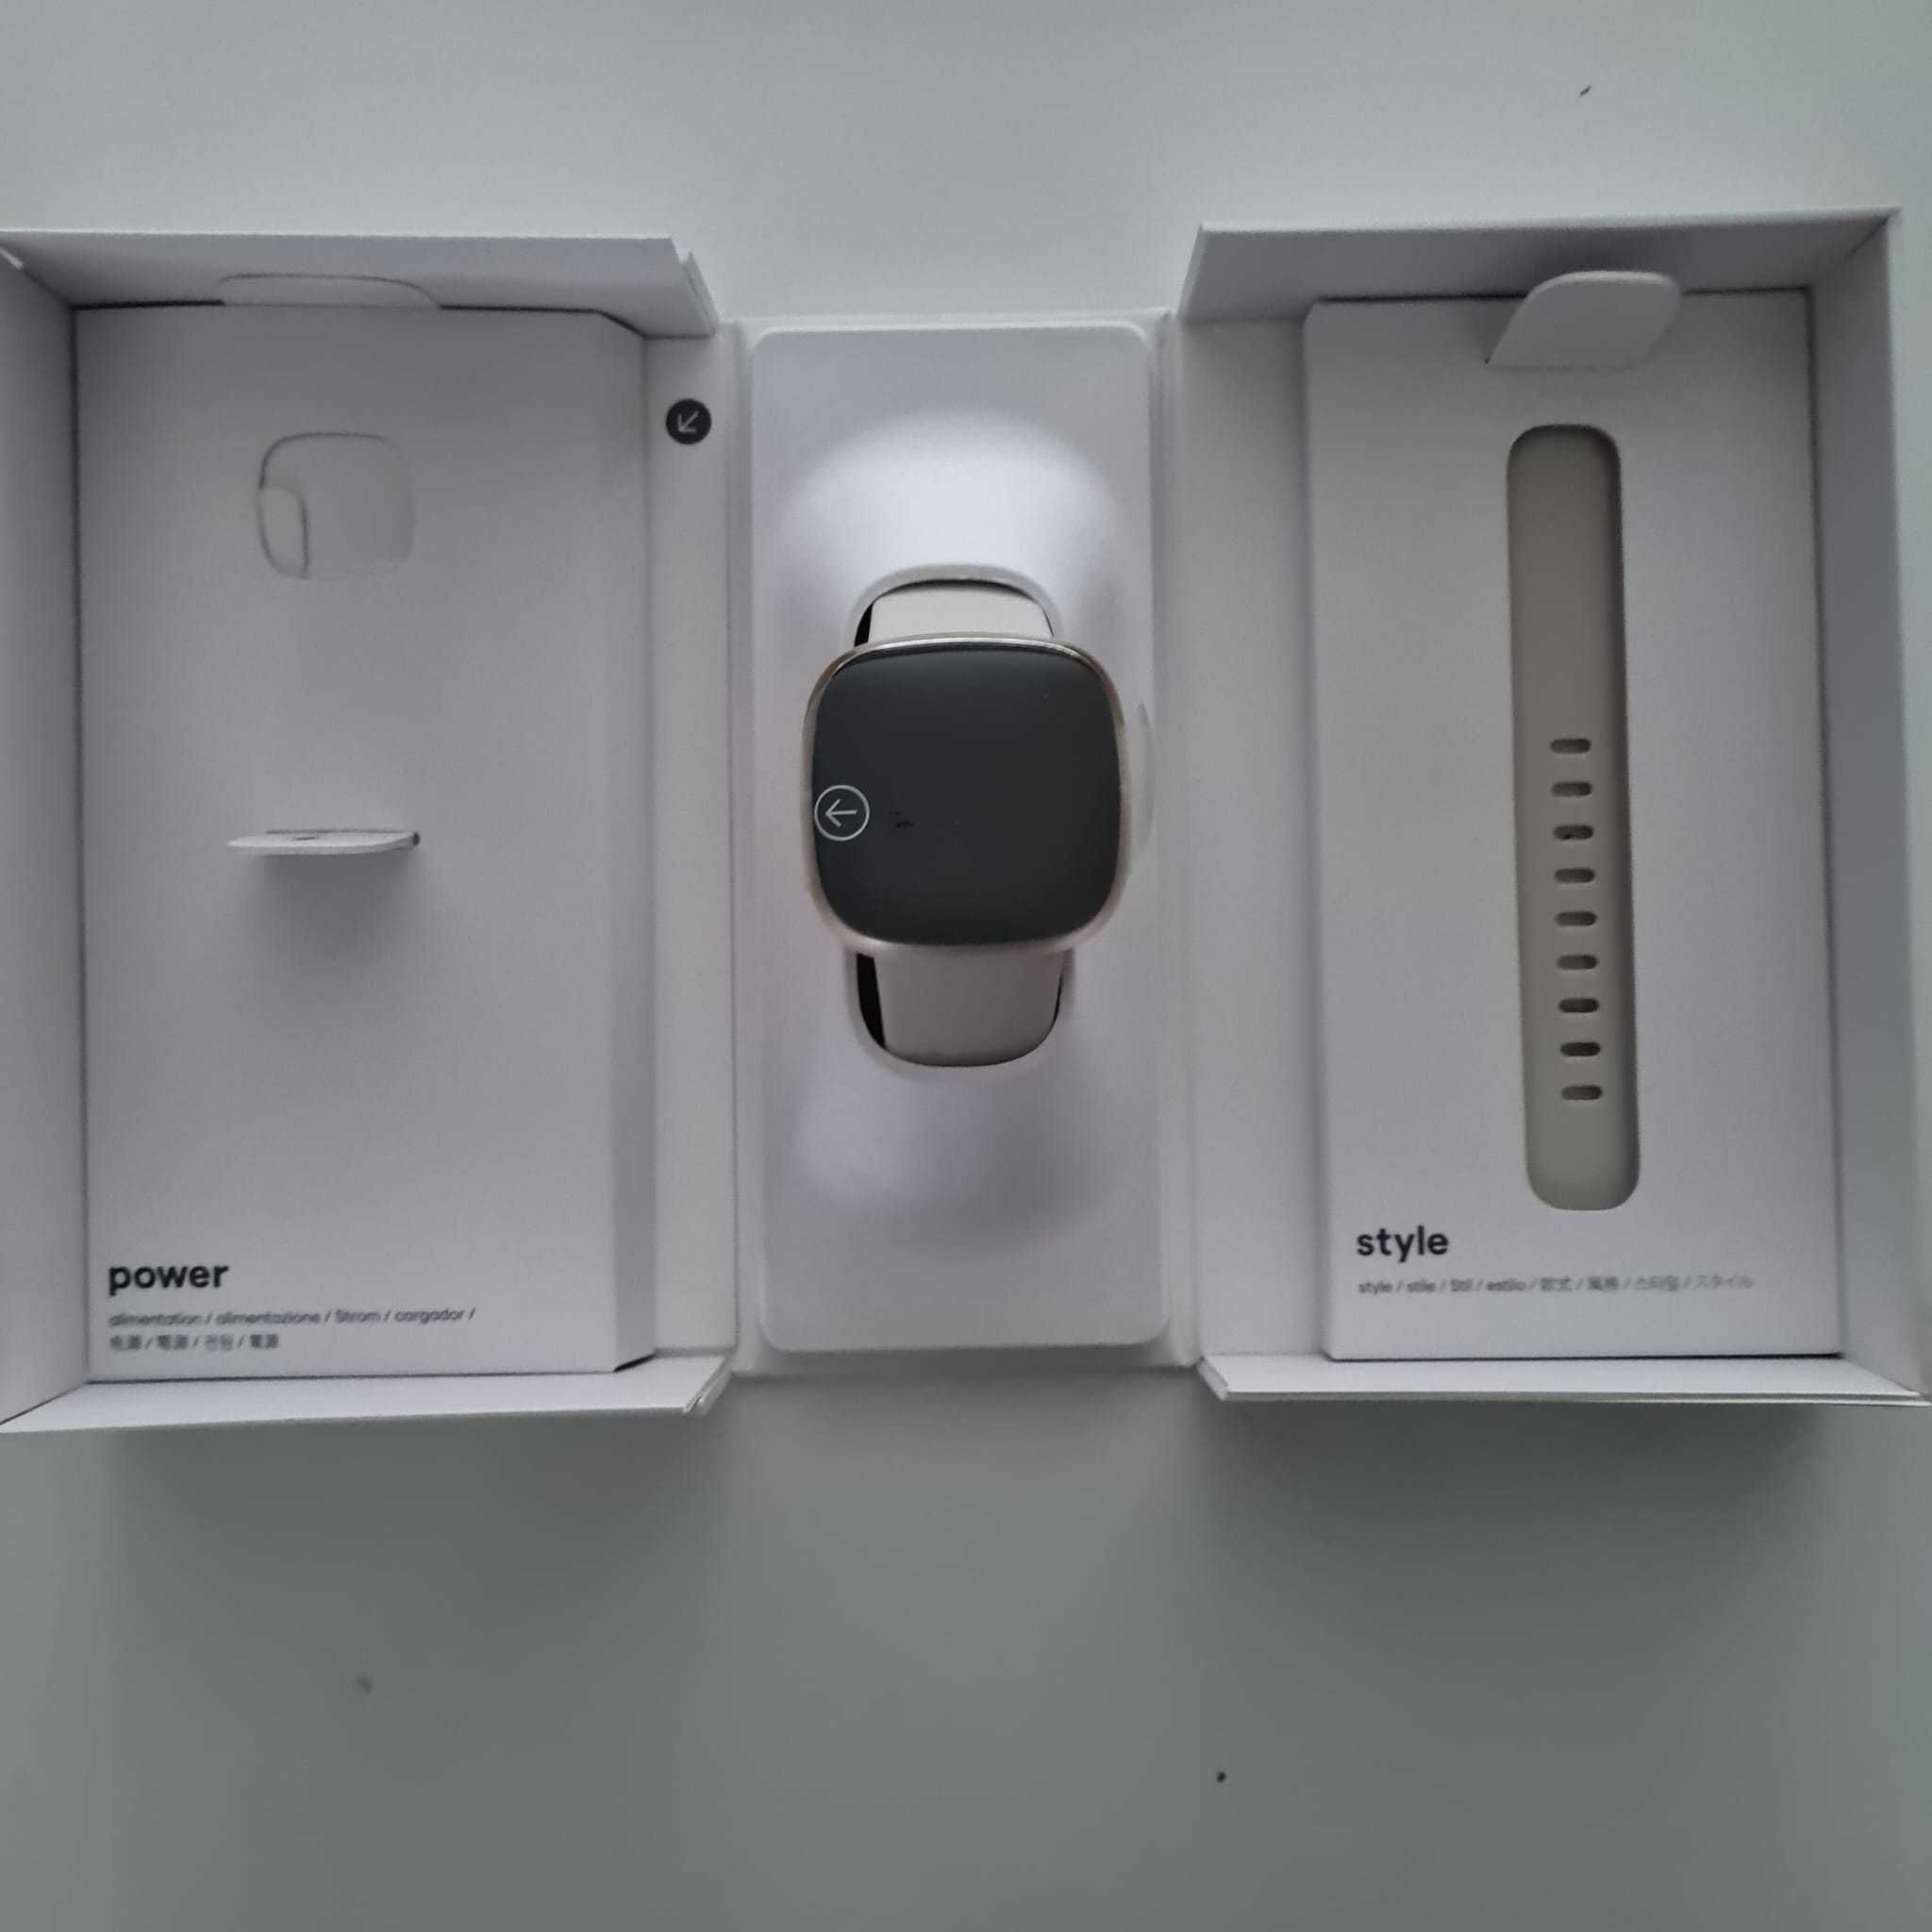 Smartwatch Fitbit Sense, Lunar White Soft Gold